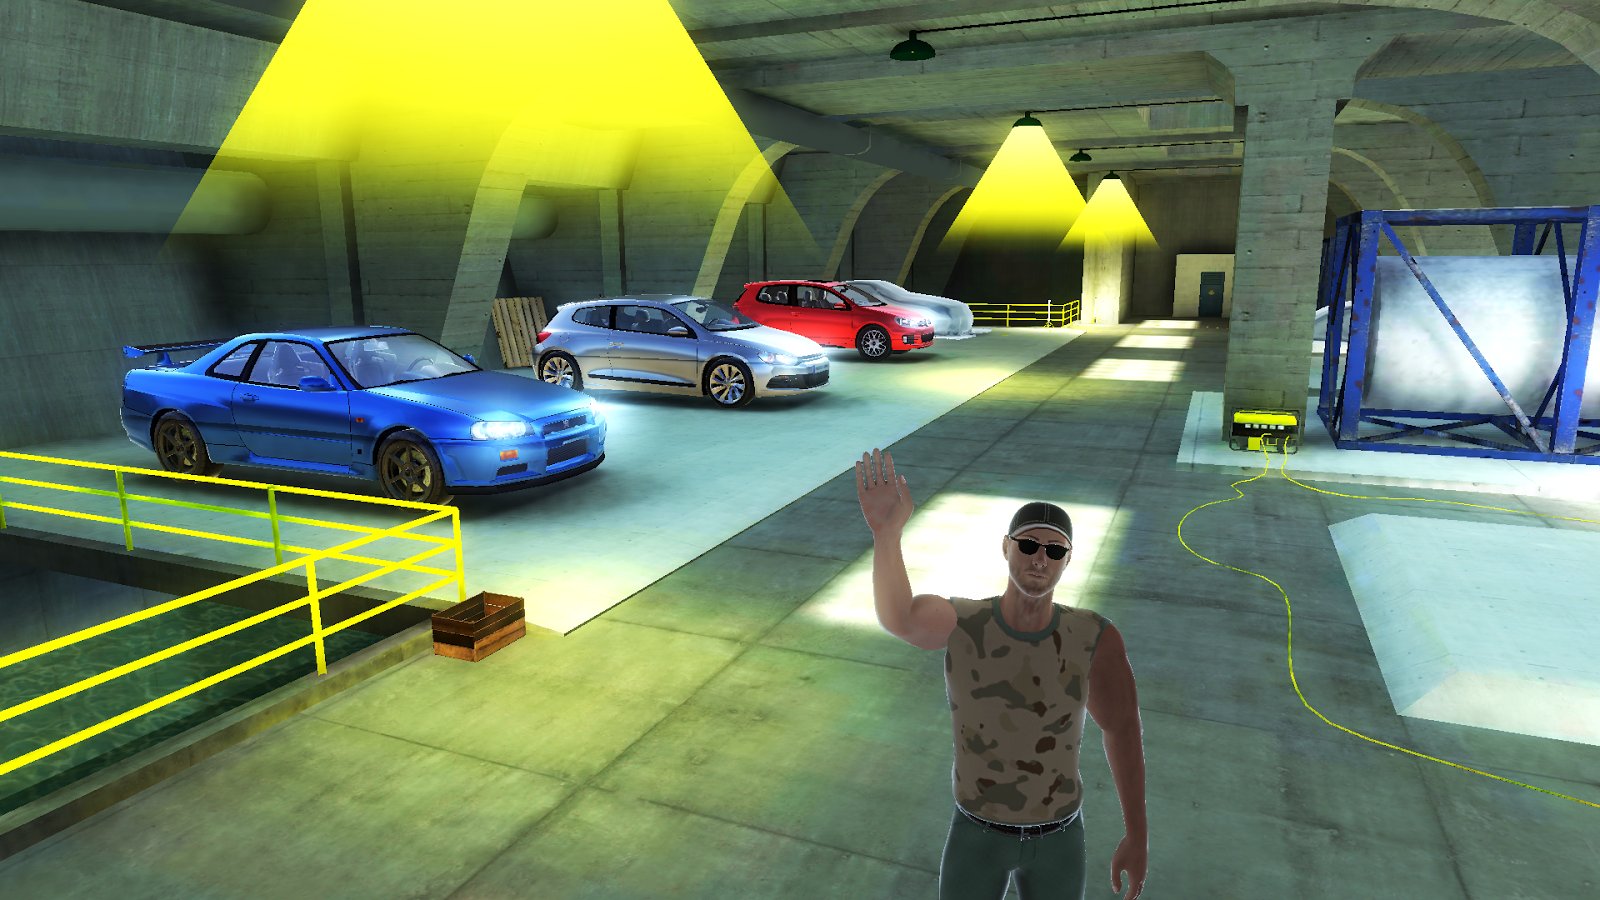 Skyline android. Дрифт игры. Симулятор вождения Nissan Skyline. Car Simulator 2 Скайлайн. Скайлайн Покер в кар дрифтинг симулятор.